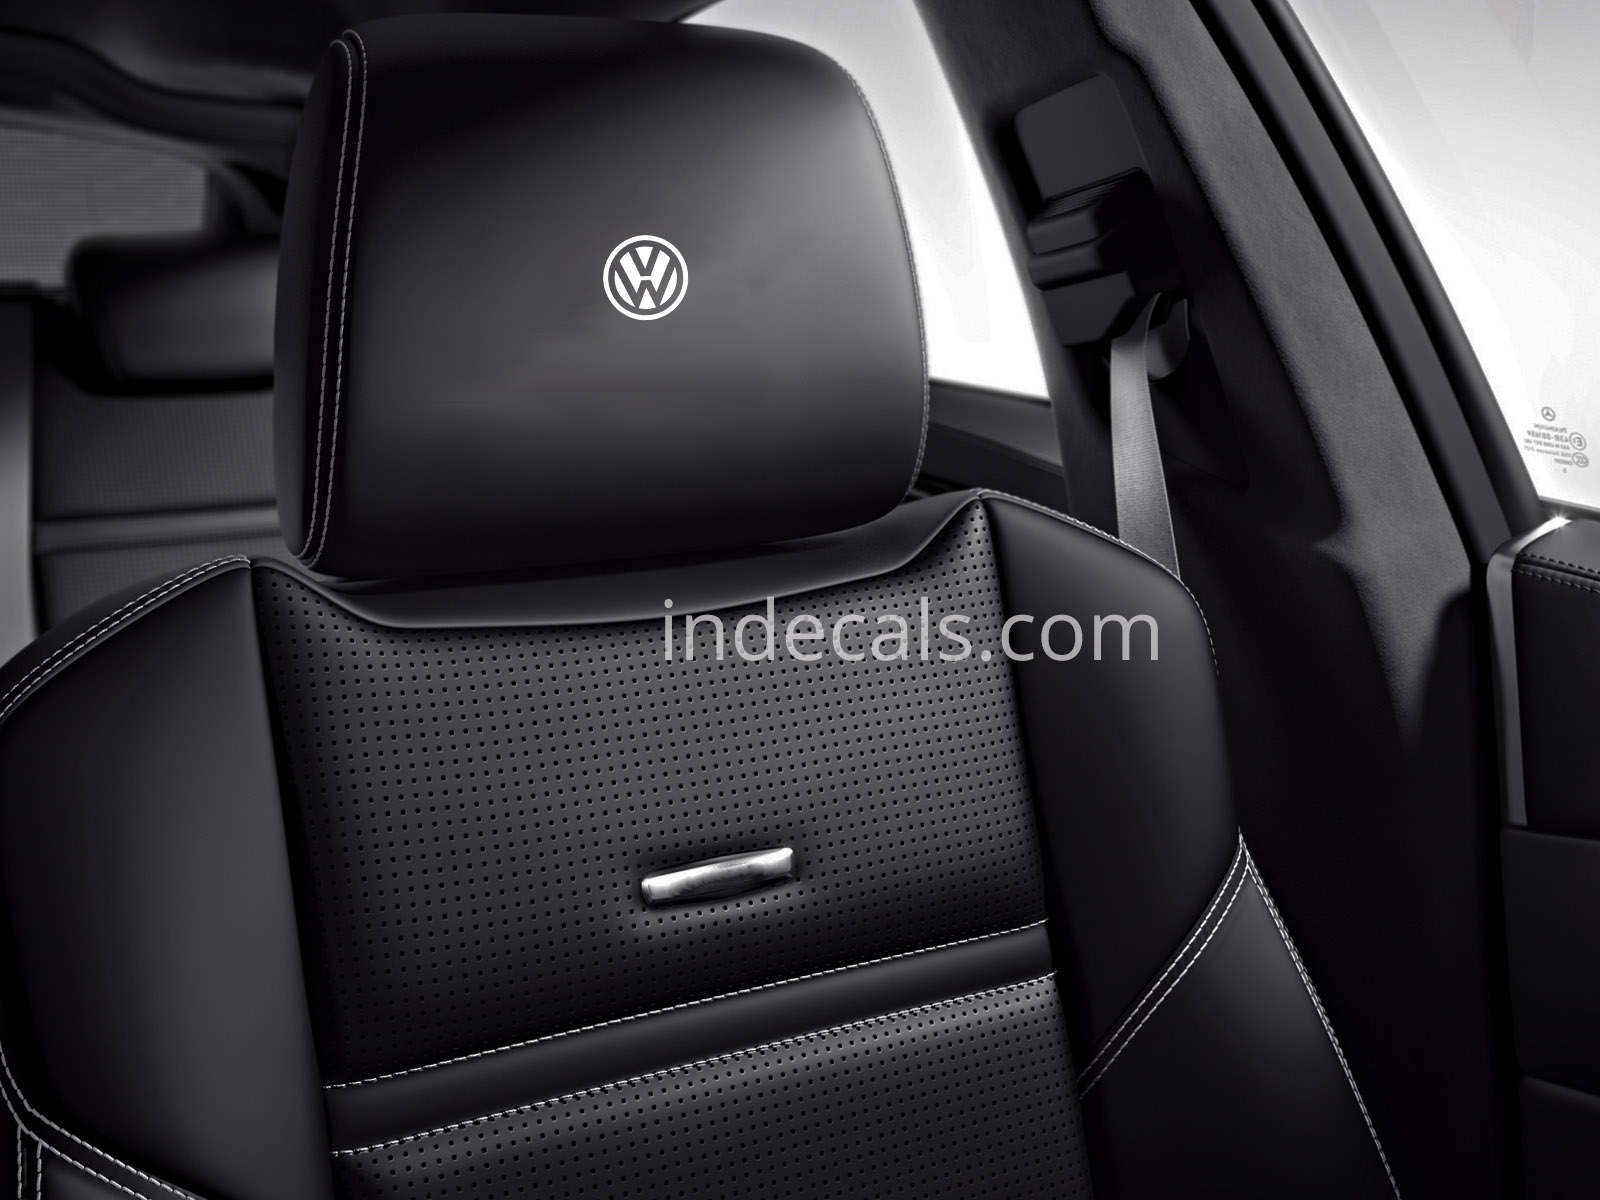 6 x Volkswagen Stickers for Headrests - White